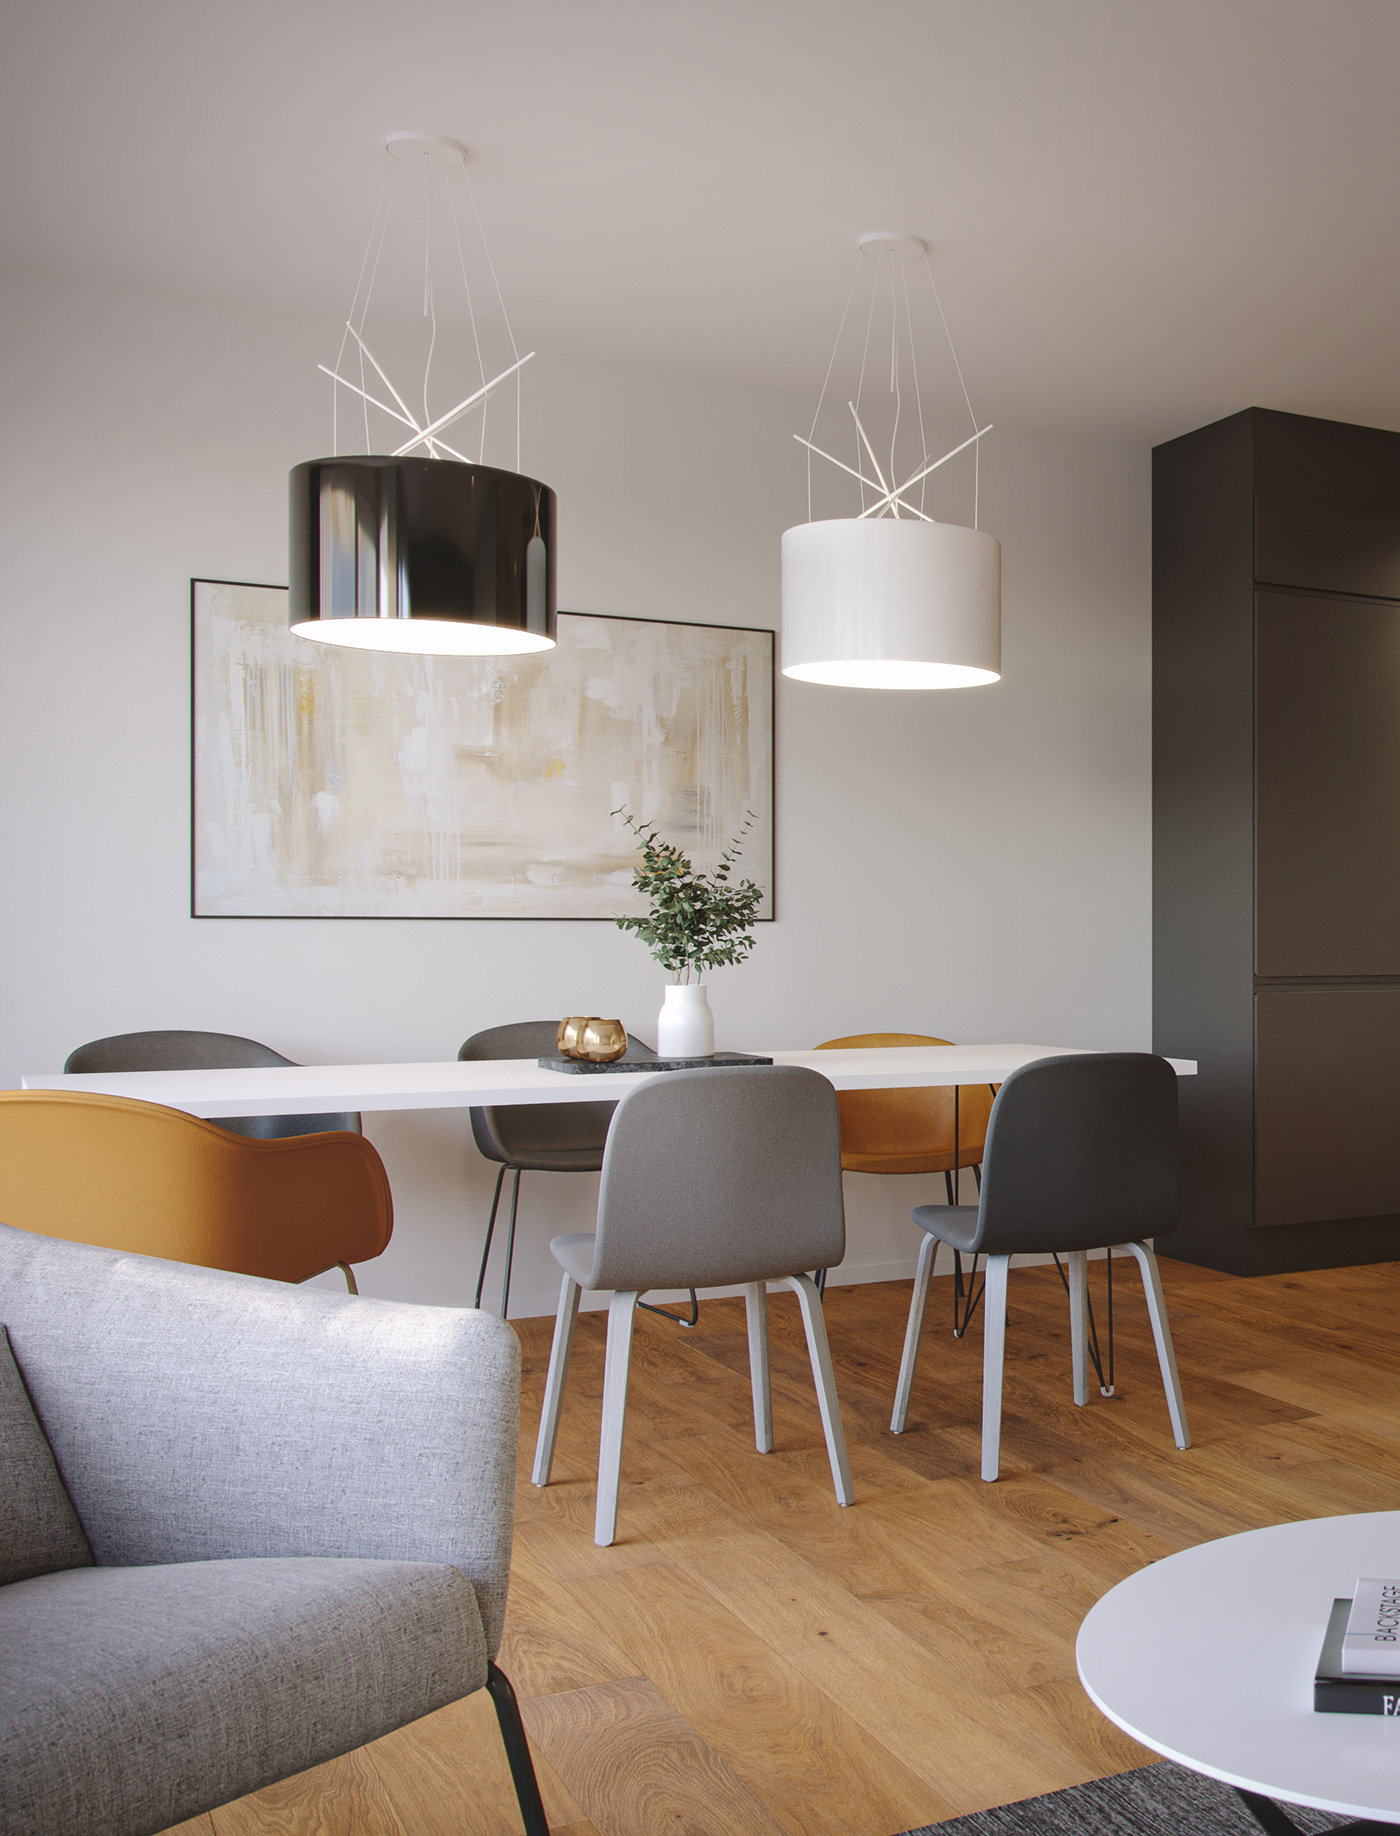 penthouse autumn mood kitchen dining area corona renderer visualization 3ds max Interior Visualization architecture